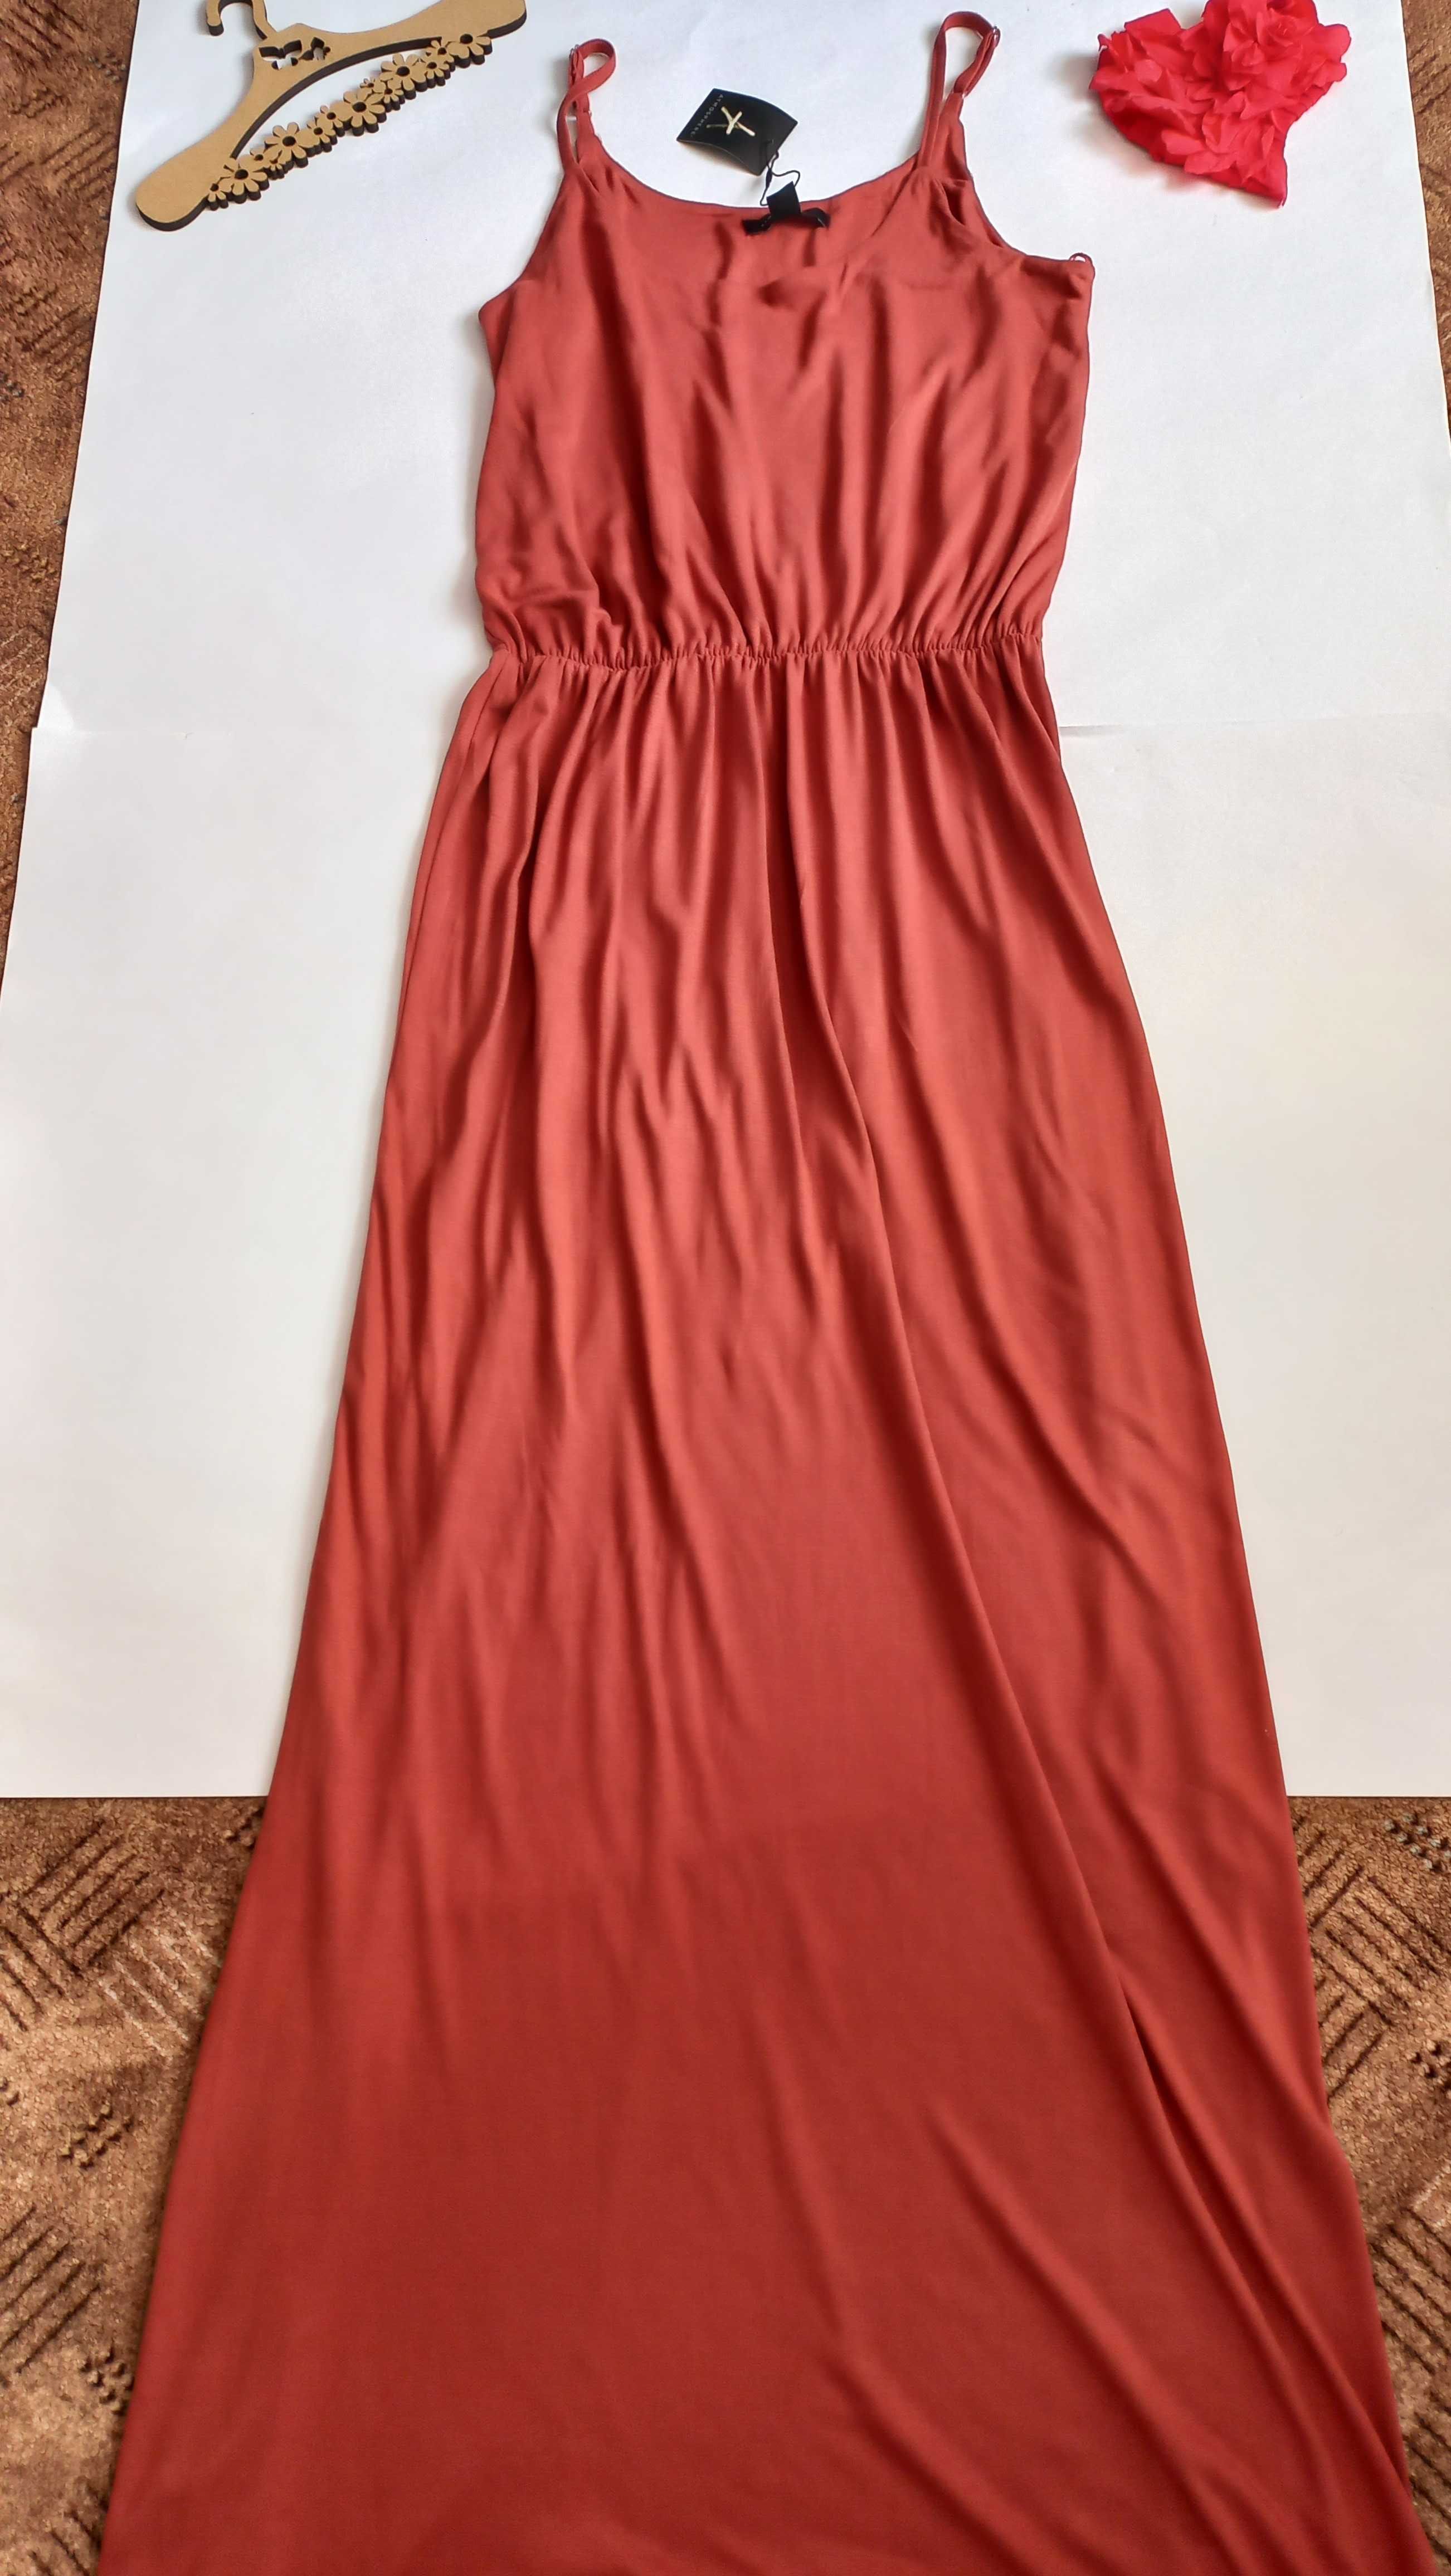 Довга сукня сарафан 50 52 розмір нове  натуральна тканина